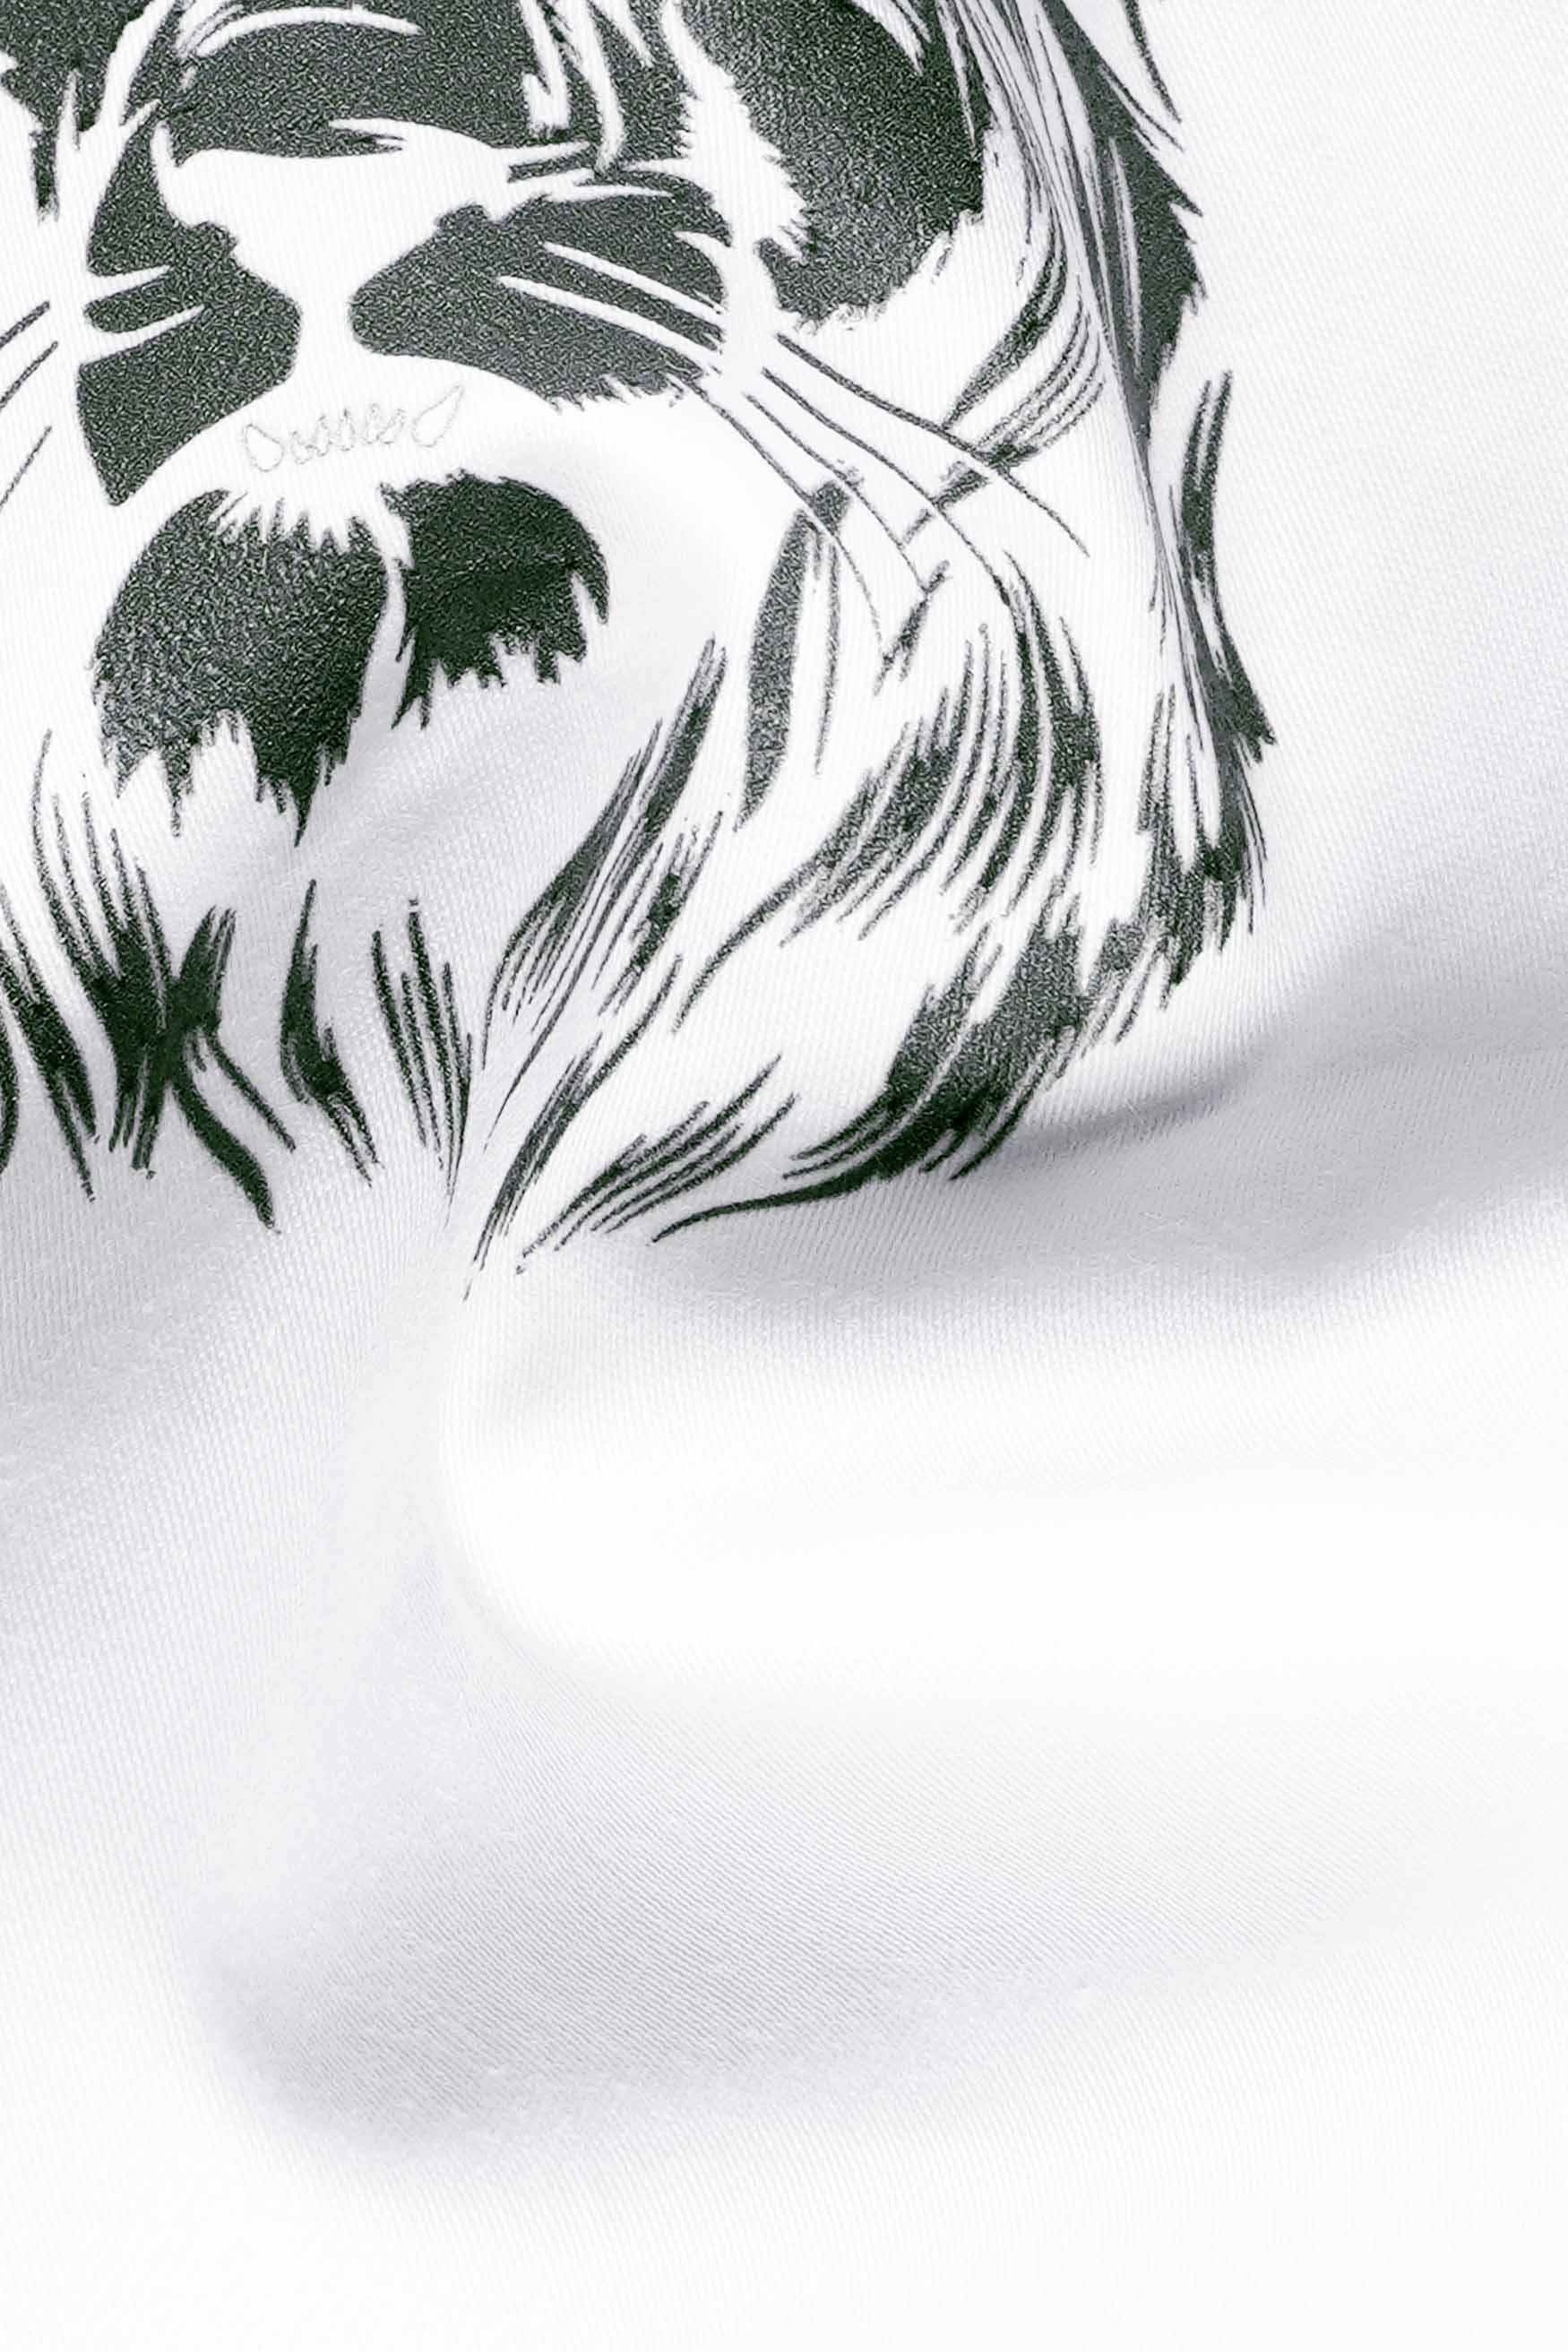 Bright White Lion Printed Subtle Sheen Super Soft Premium Cotton Designer Shirt